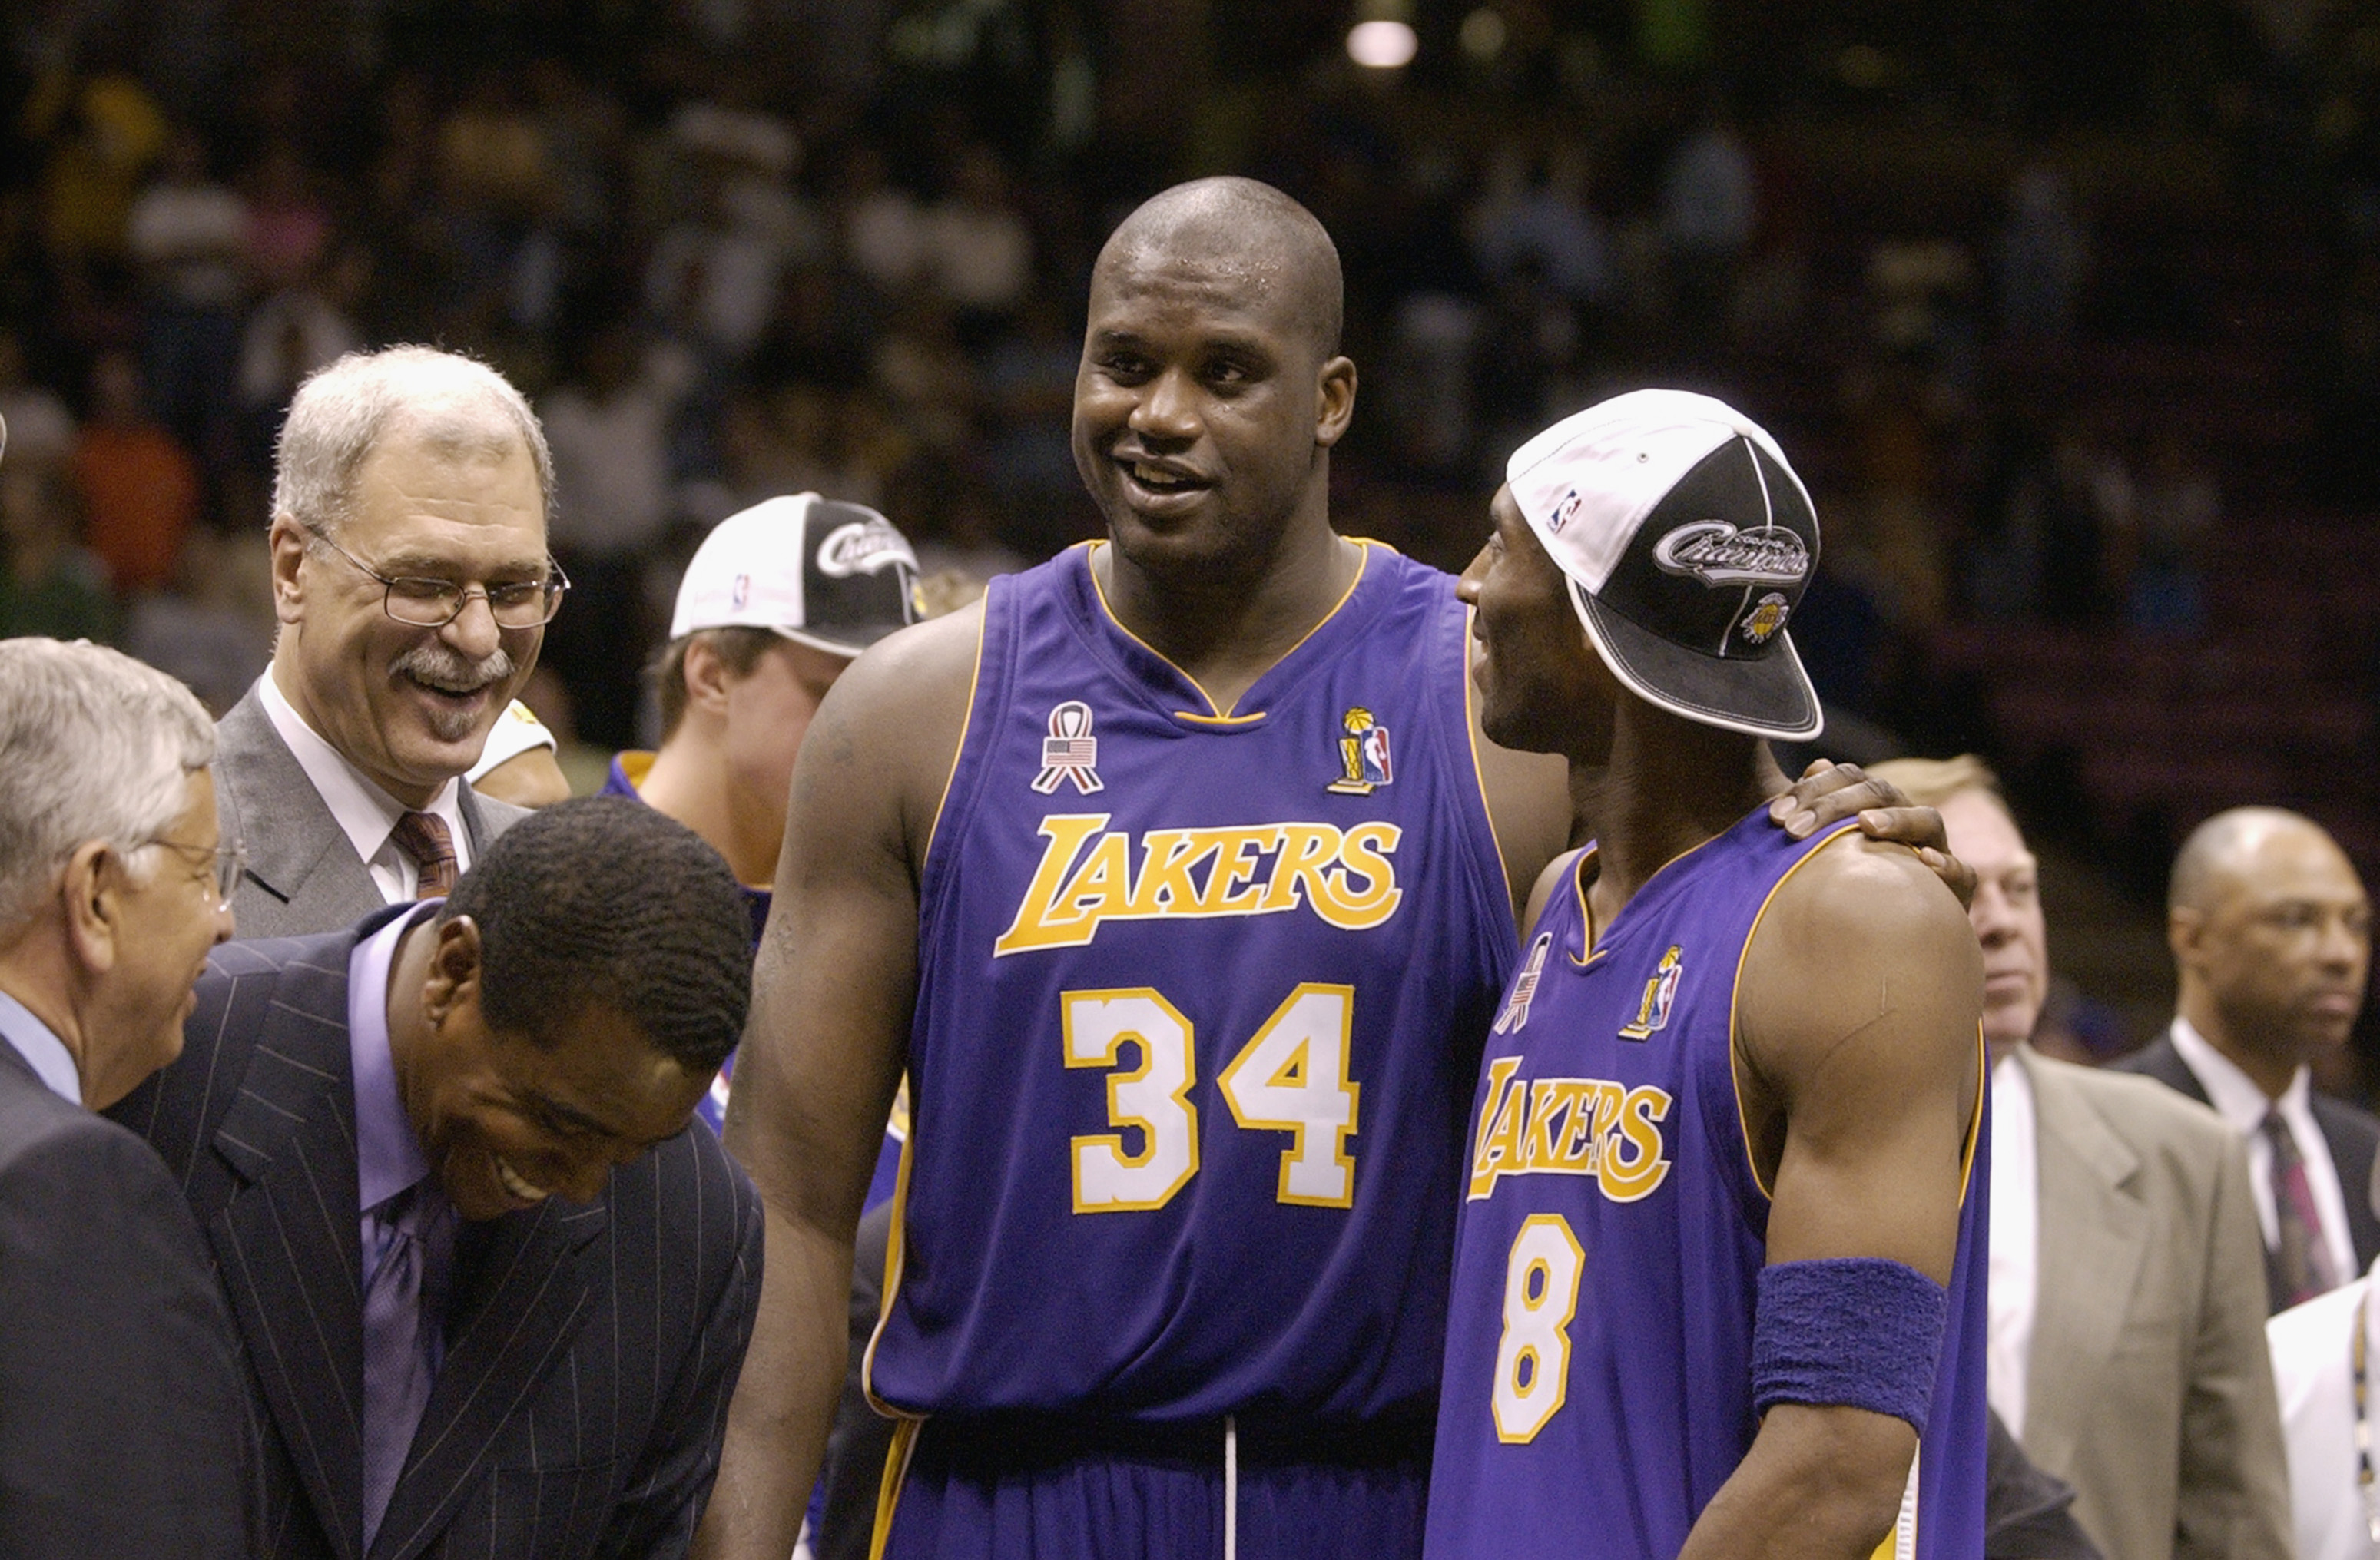 NBA Finals MVP, Kobe Bryant